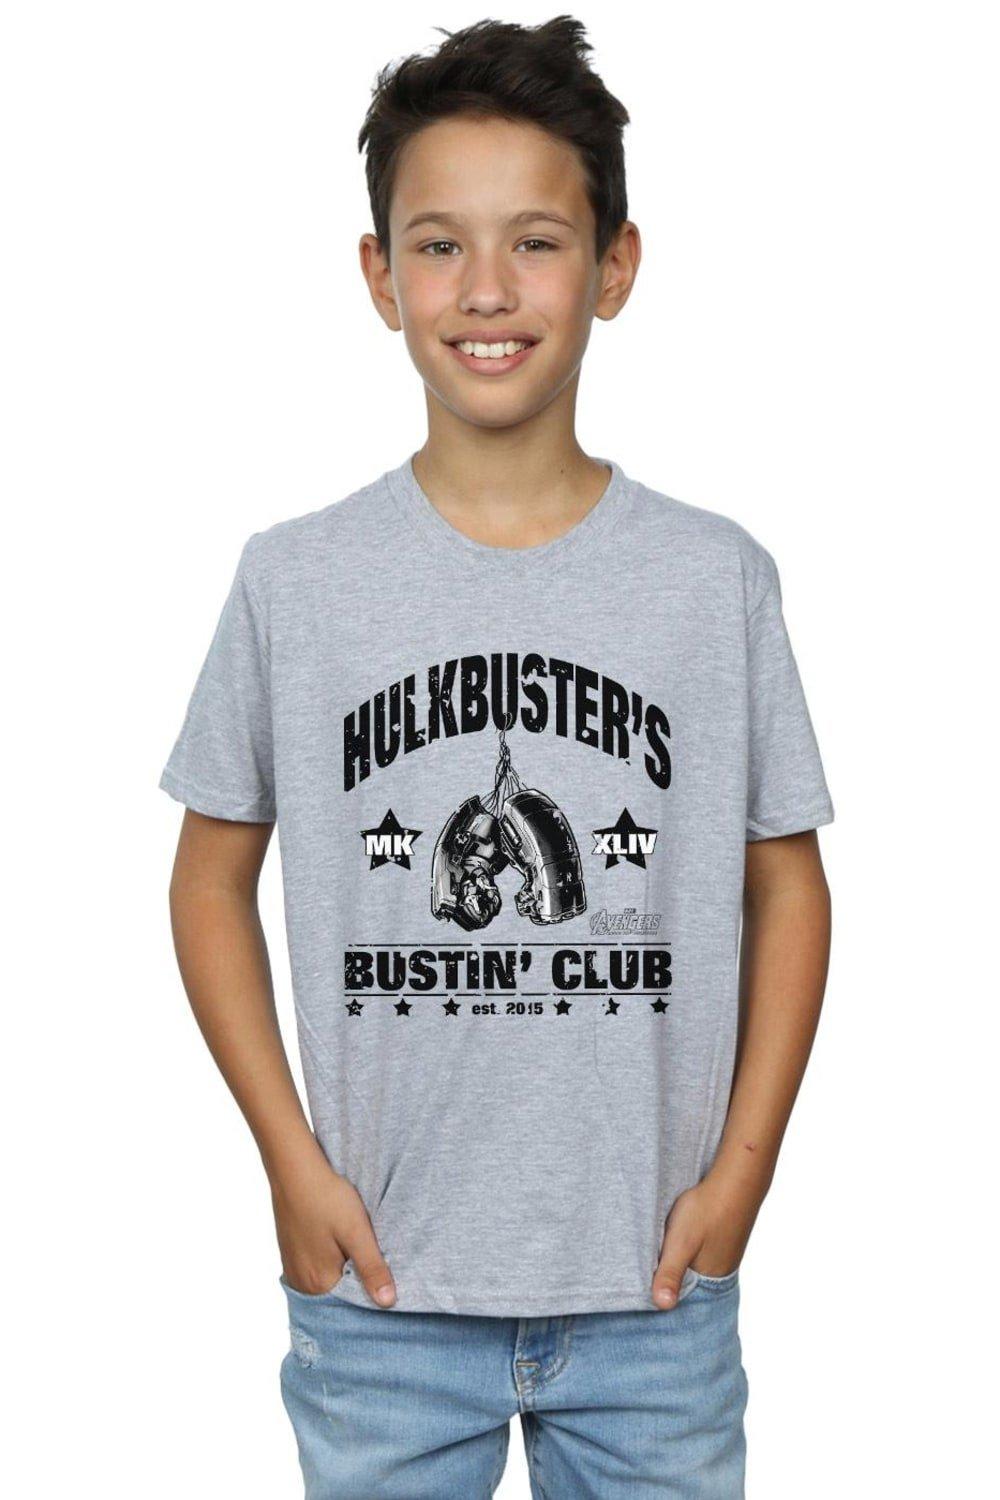 Iron Man Hulkbuster’s Bustin’ Club T-Shirt